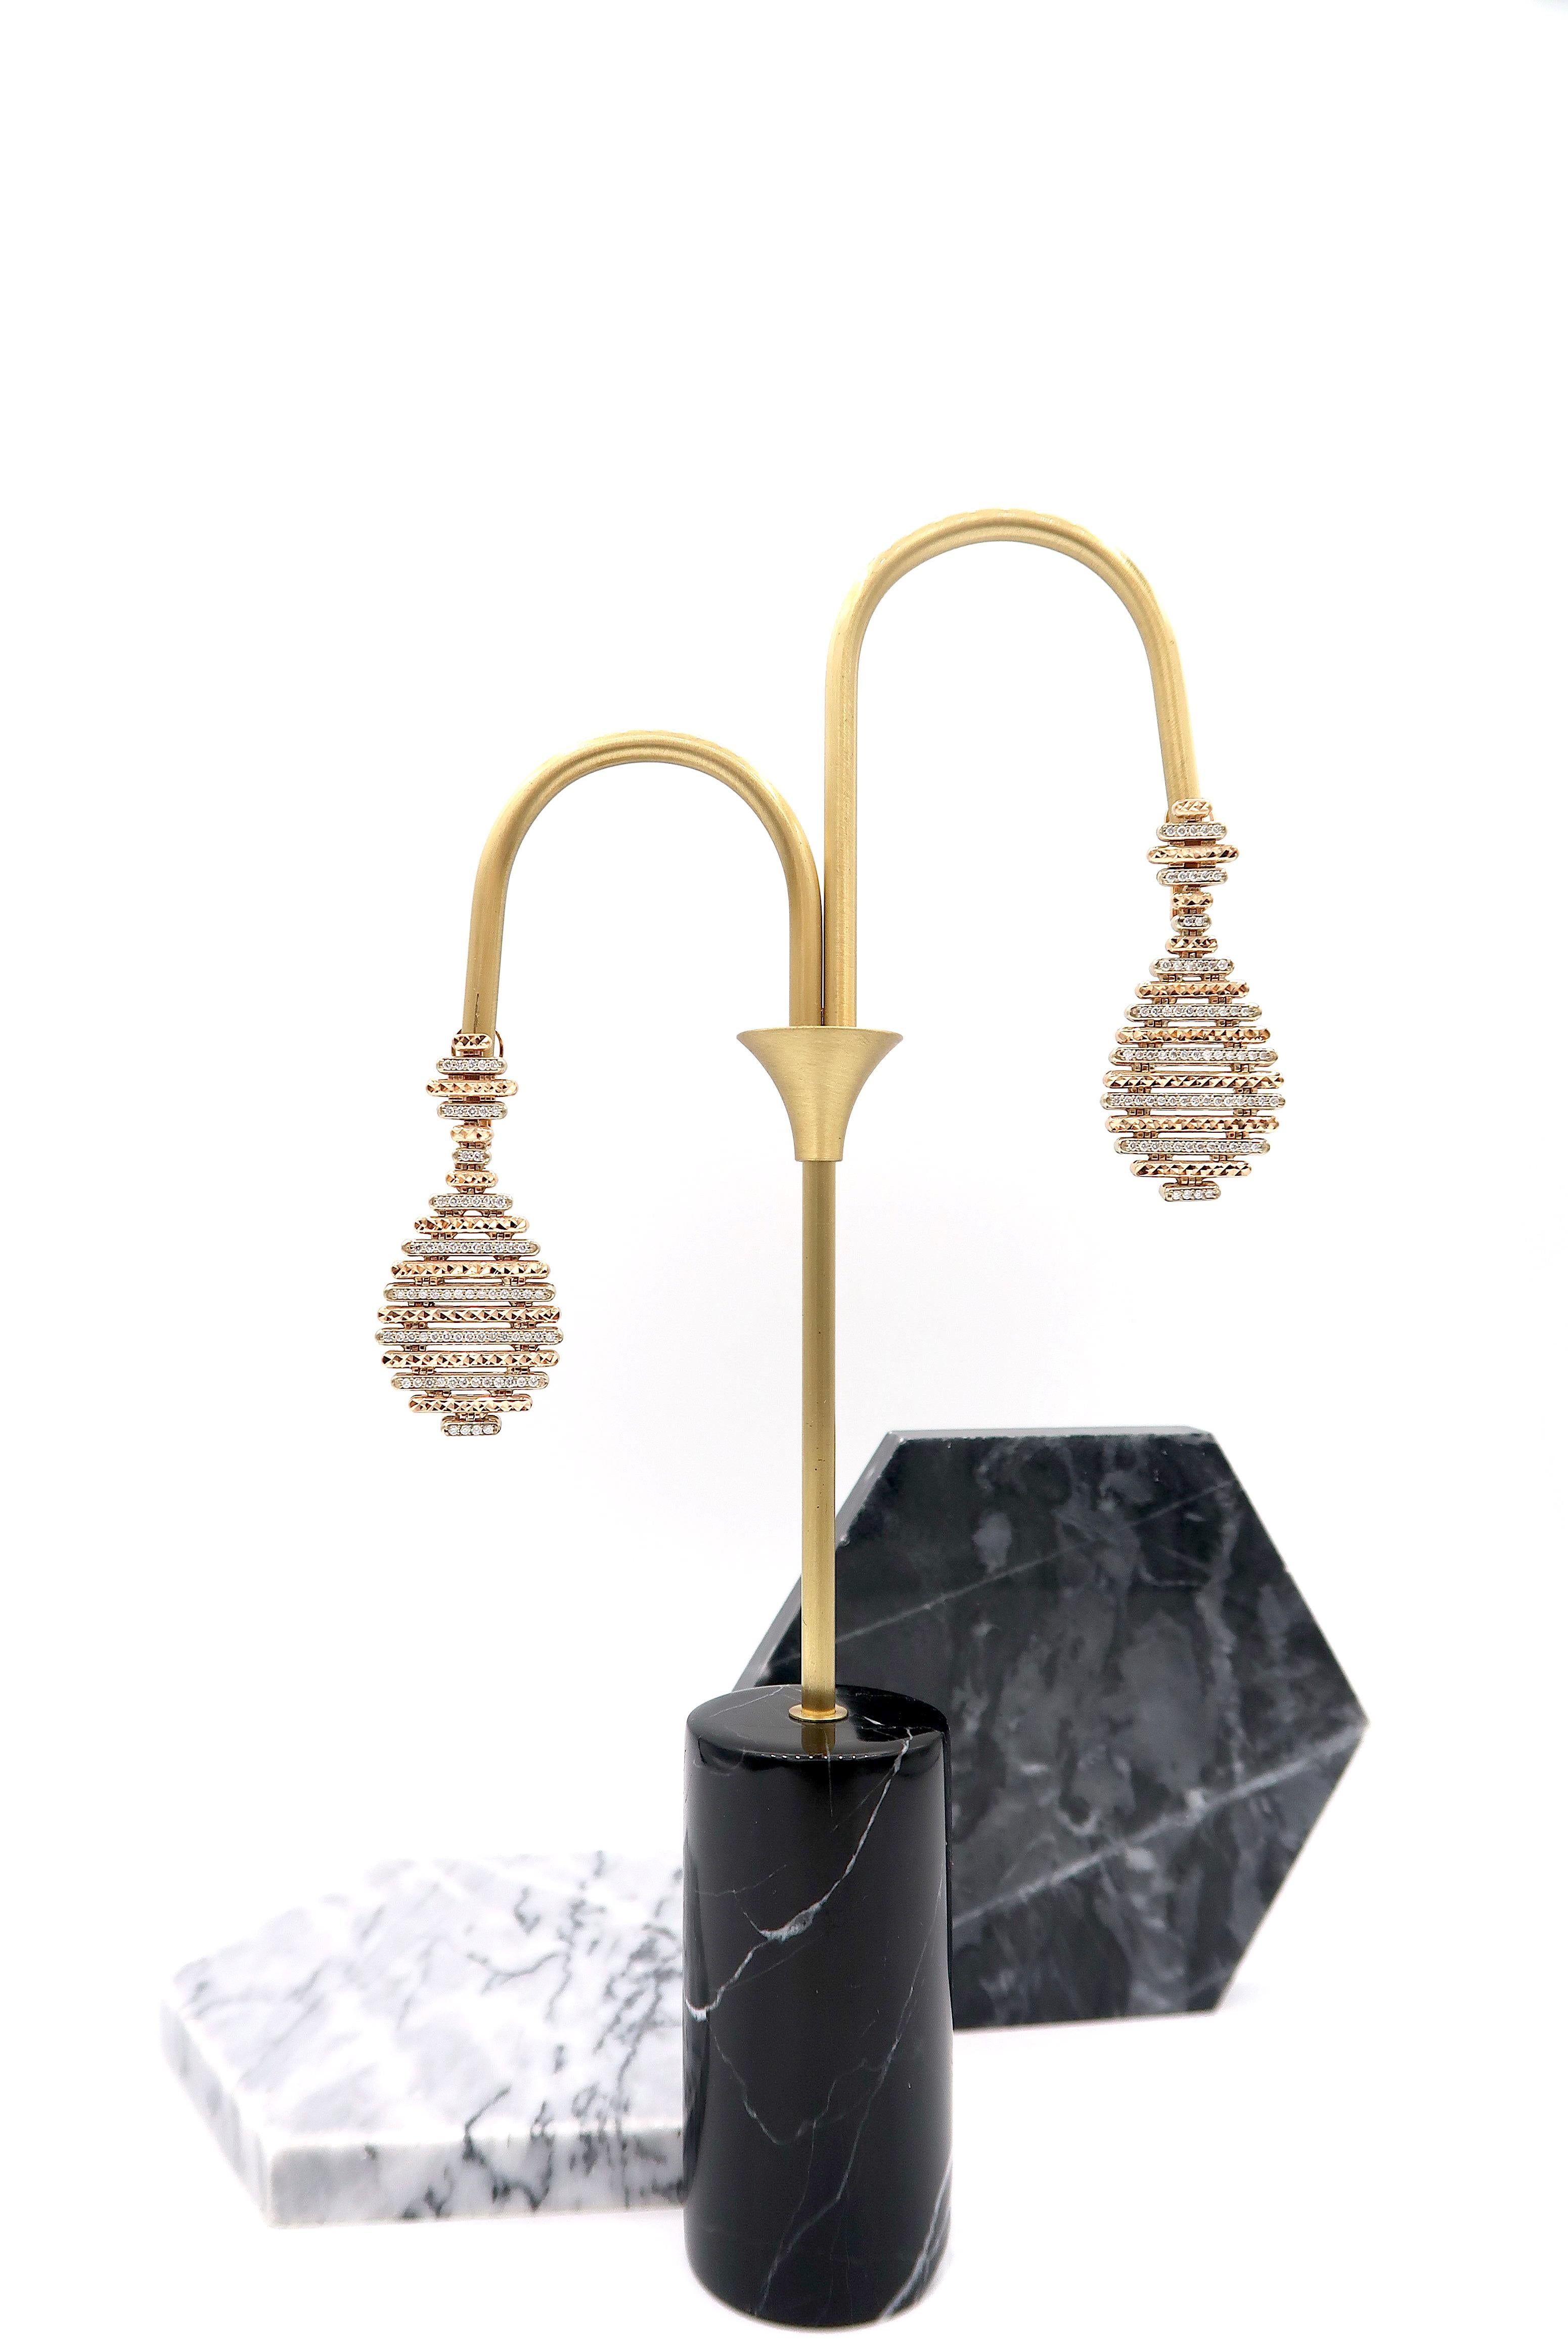 Contemporary Boon Multiple Horizontal Rods Diamond Chandelier Earrings 18 Karat Rose Gold For Sale